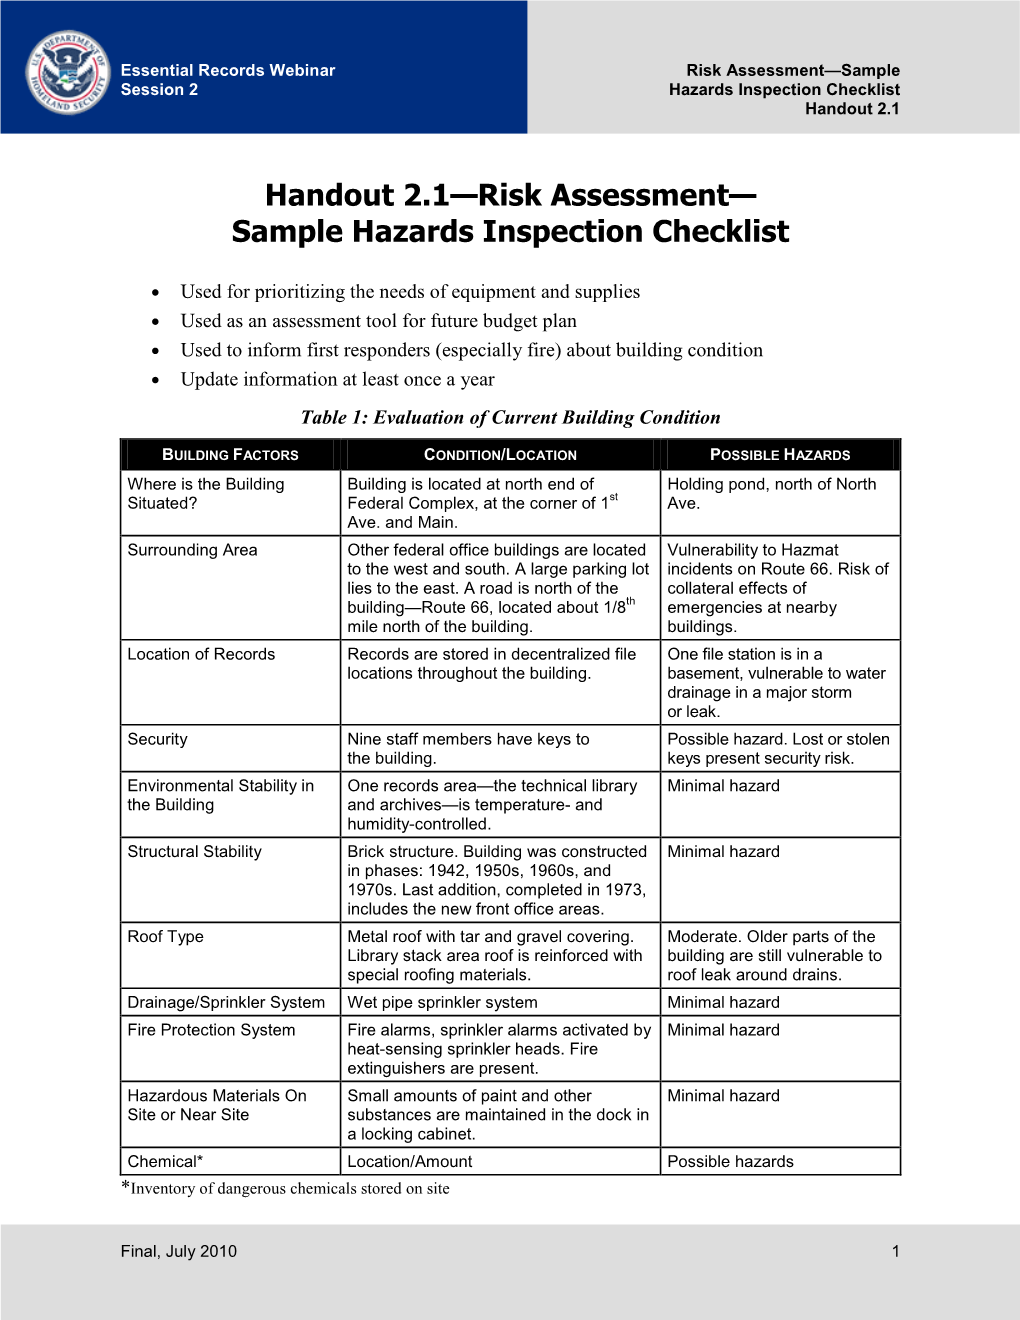 Risk Assessment—Sample Hazards Inspection Checklist